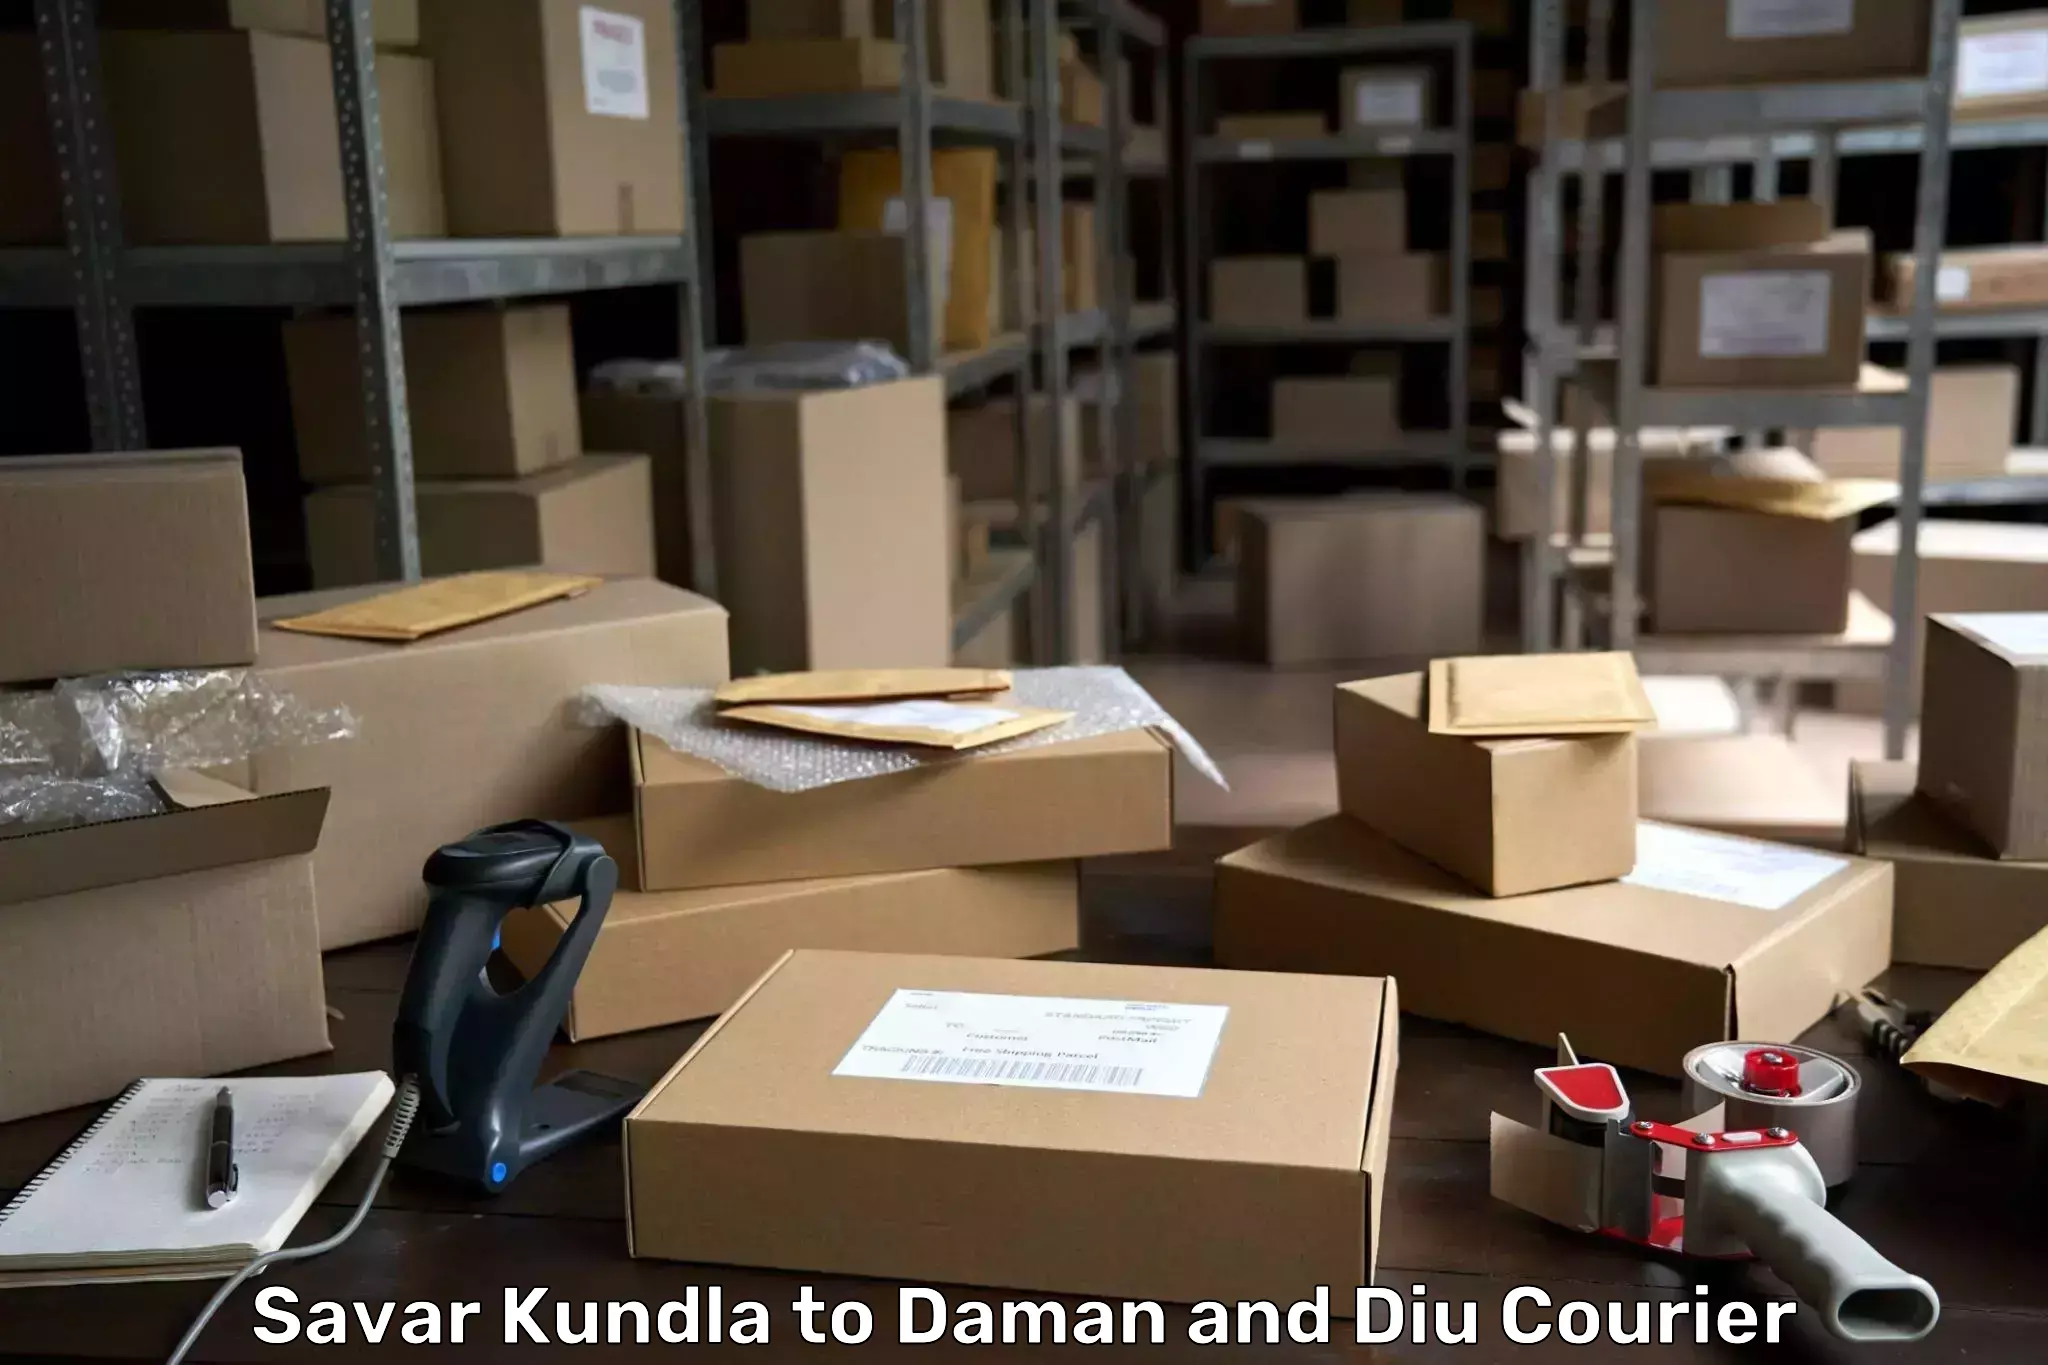 Express delivery capabilities Savar Kundla to Daman